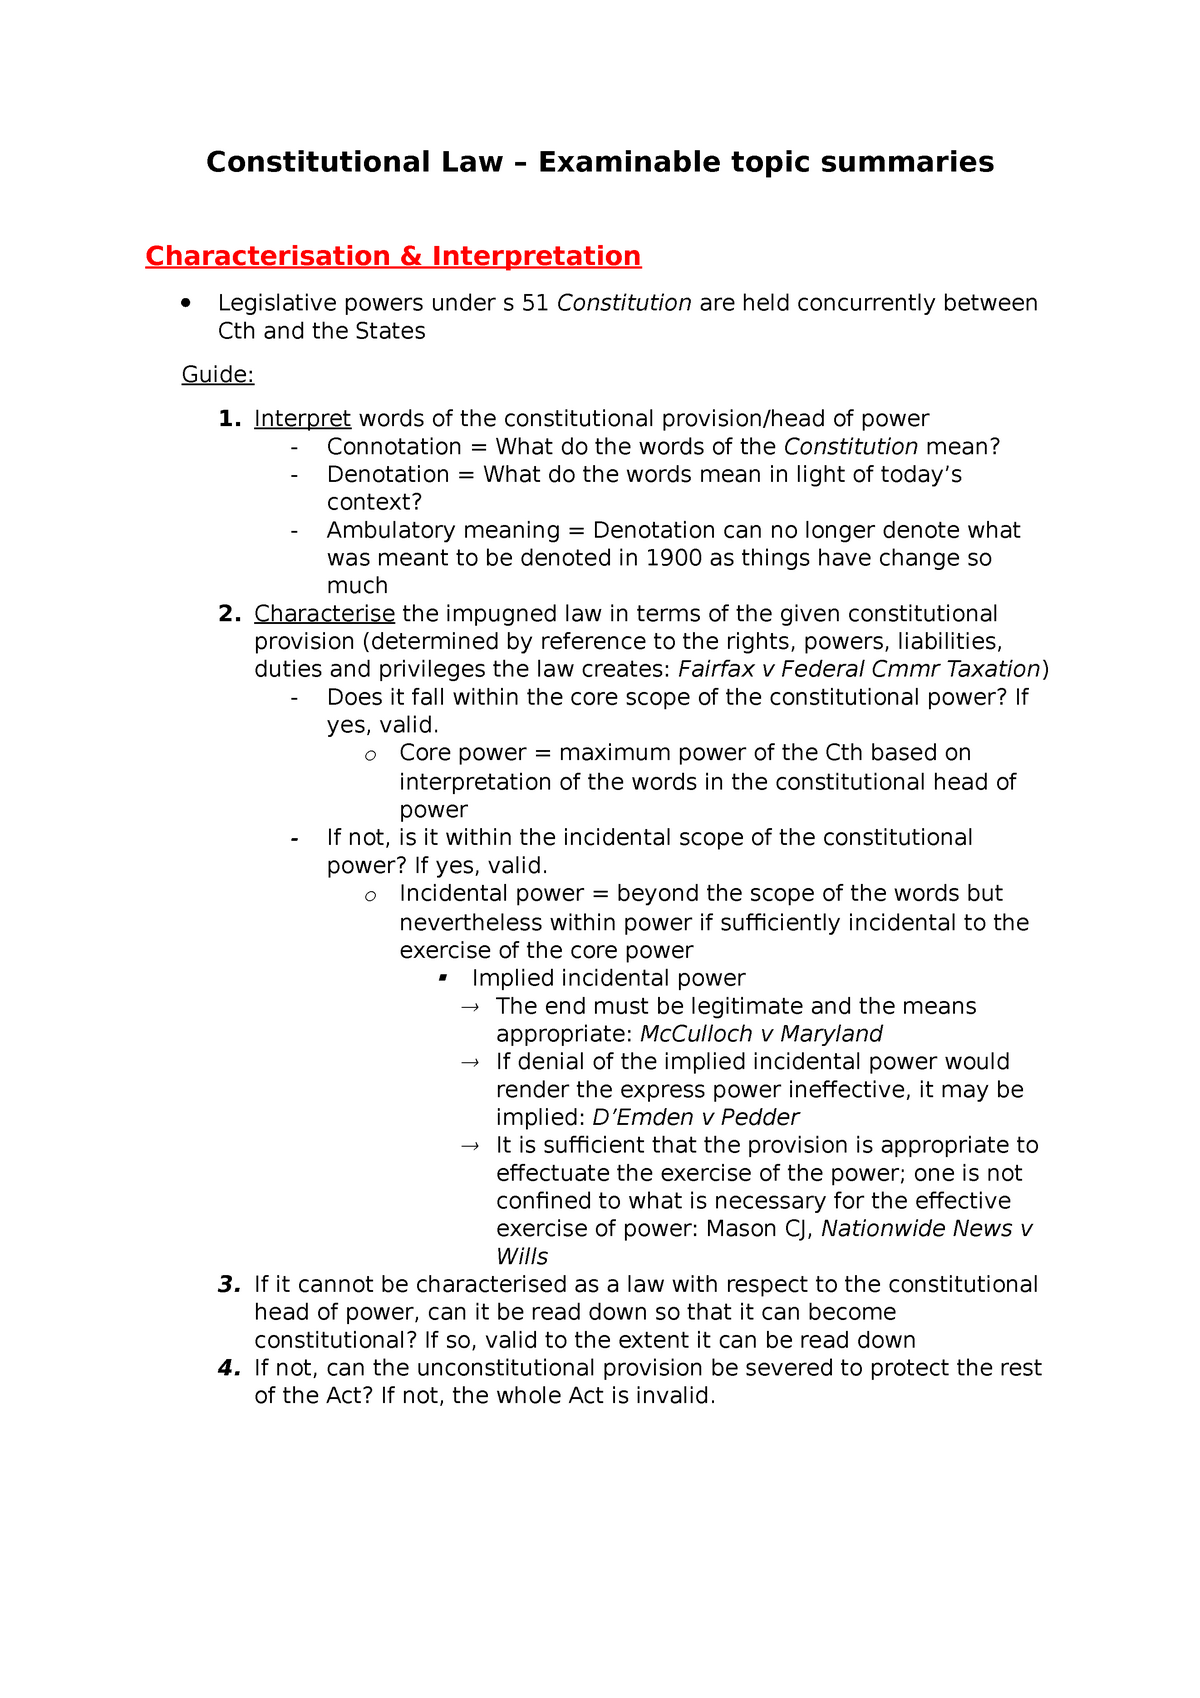 llm dissertation topics in constitutional law pdf